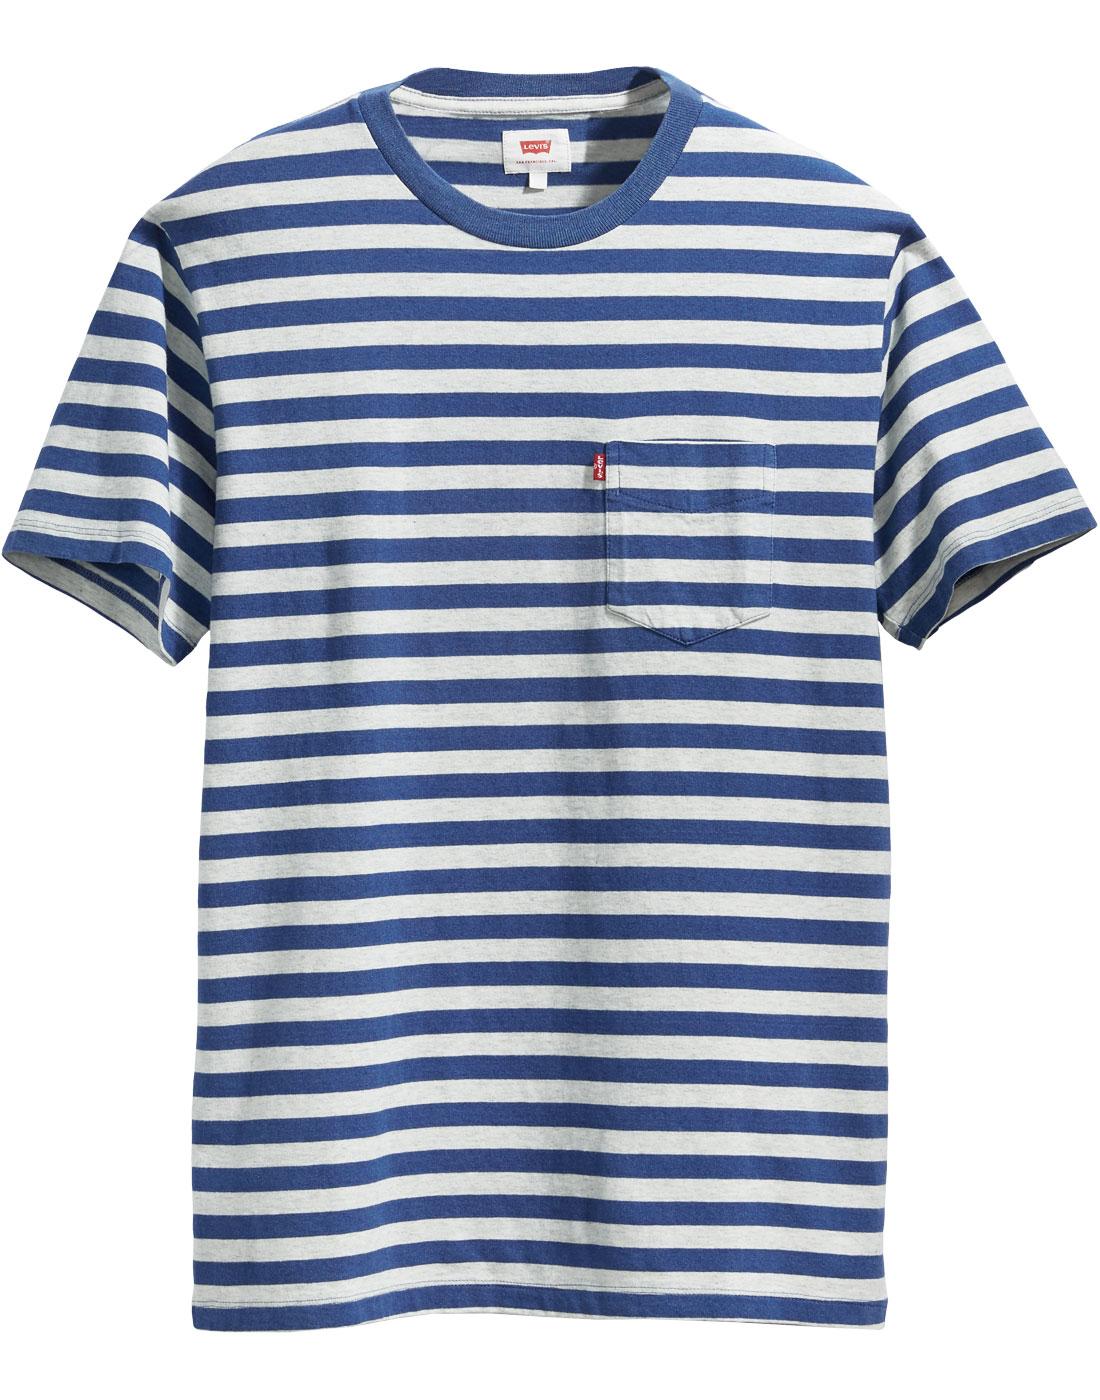 LEVI'S Men's Retro Indie Mod Blue Stripe Sunset Pocket T-shirt